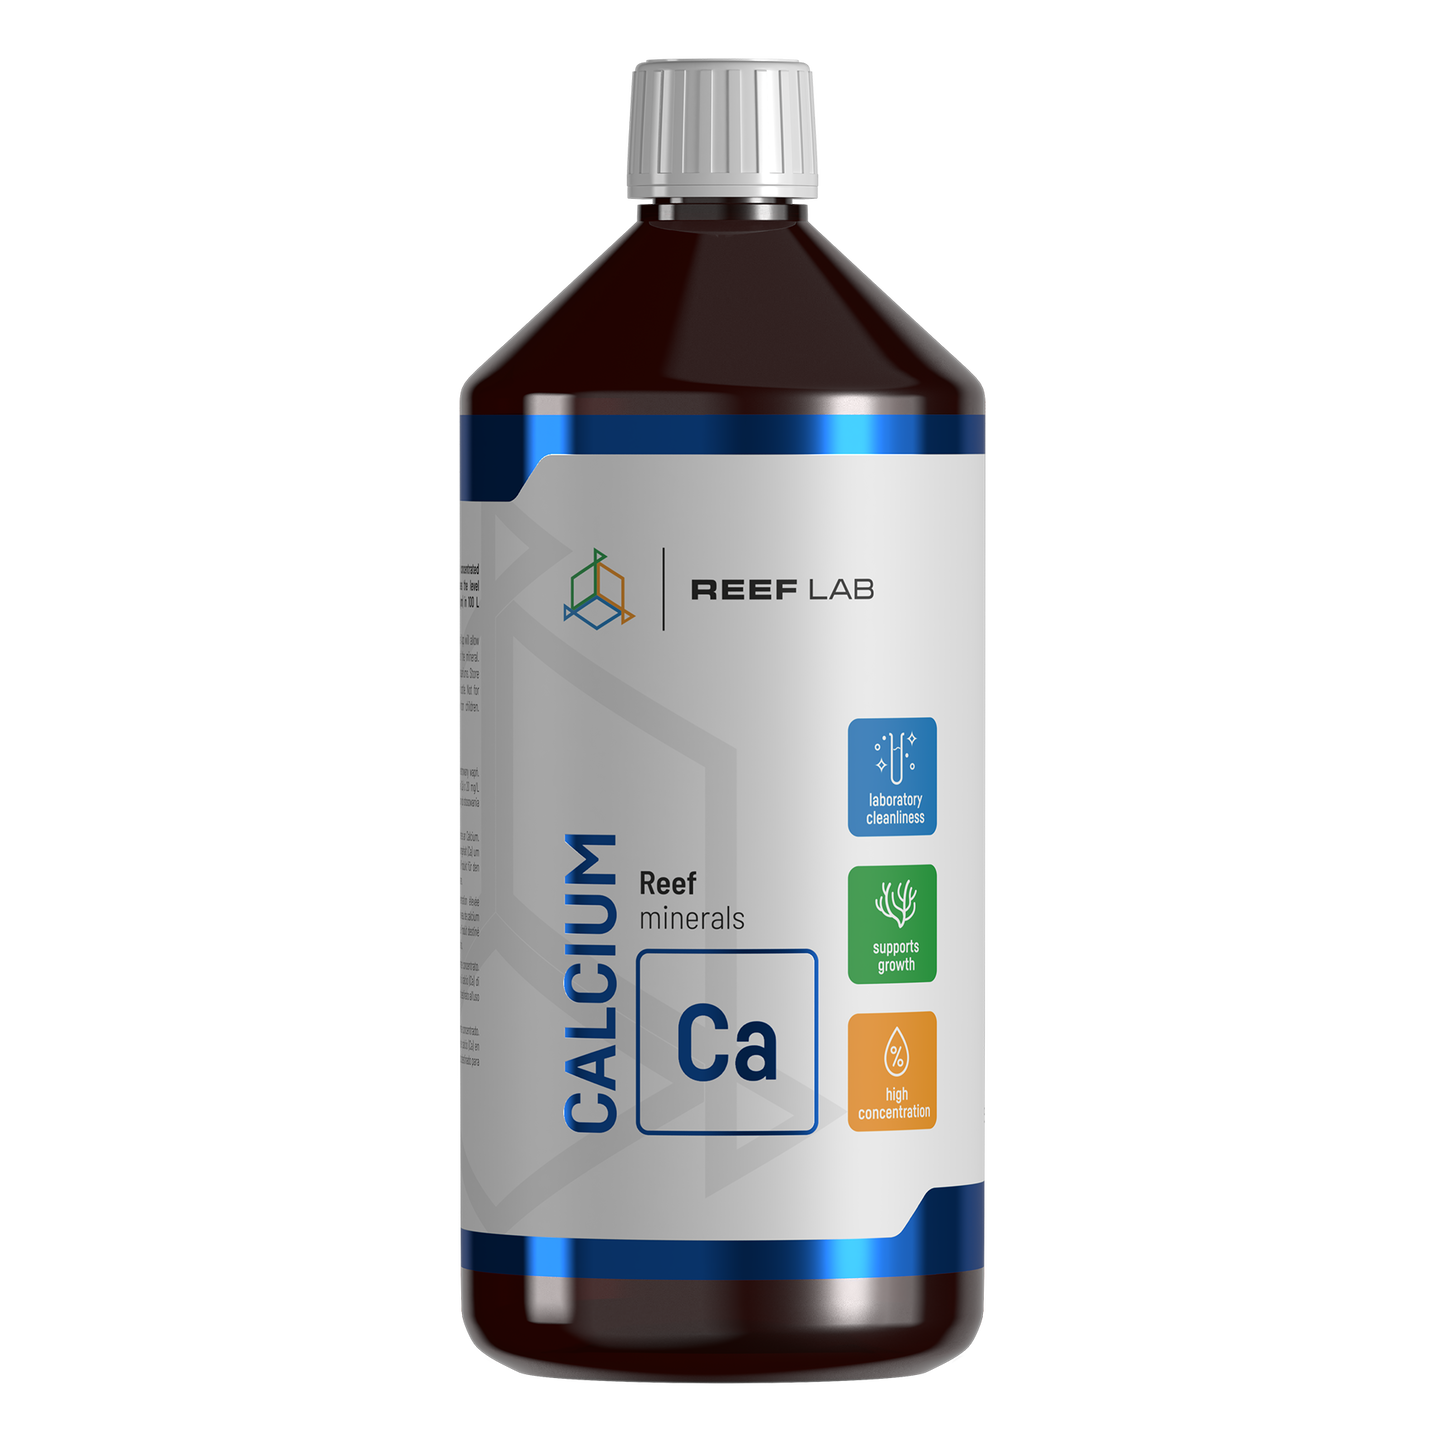 Reef Factory Minerals Calcium (Ca) 1 Liter